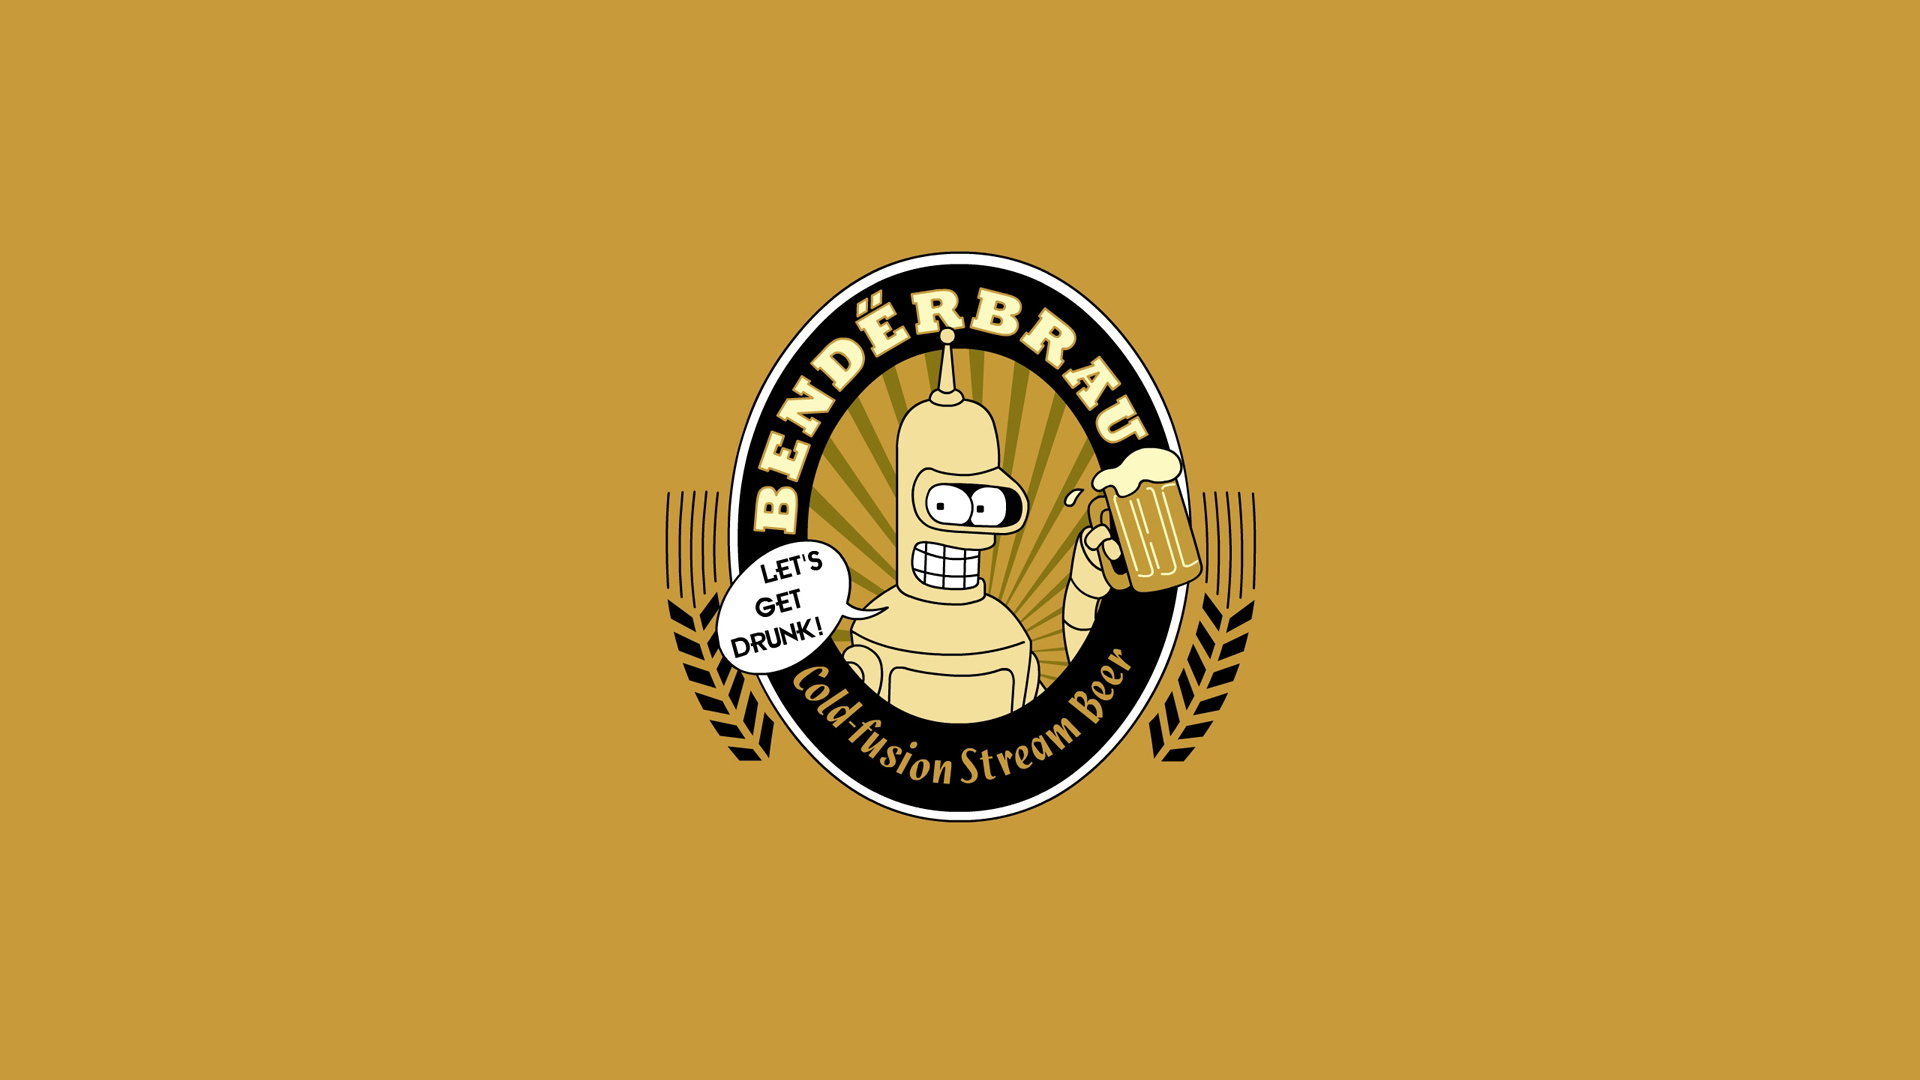 Best Bender (Futurama) wallpaper ID:253763 for High Resolution full hd 1080p desktop